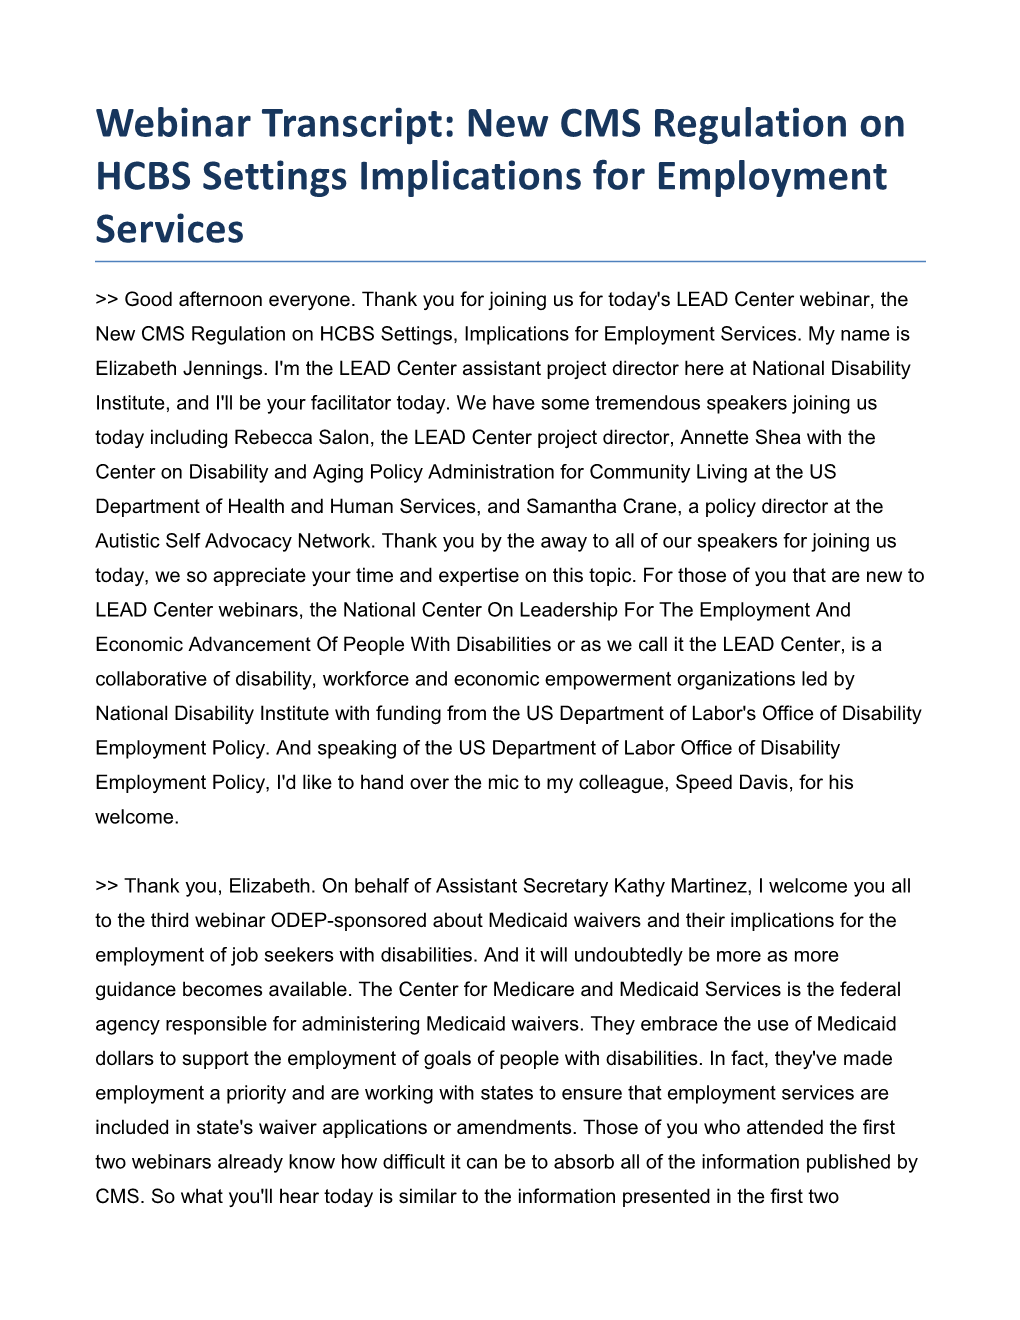 Webinar Transcript: New CMS Regulation on HCBS Settings Implications for Employment Services